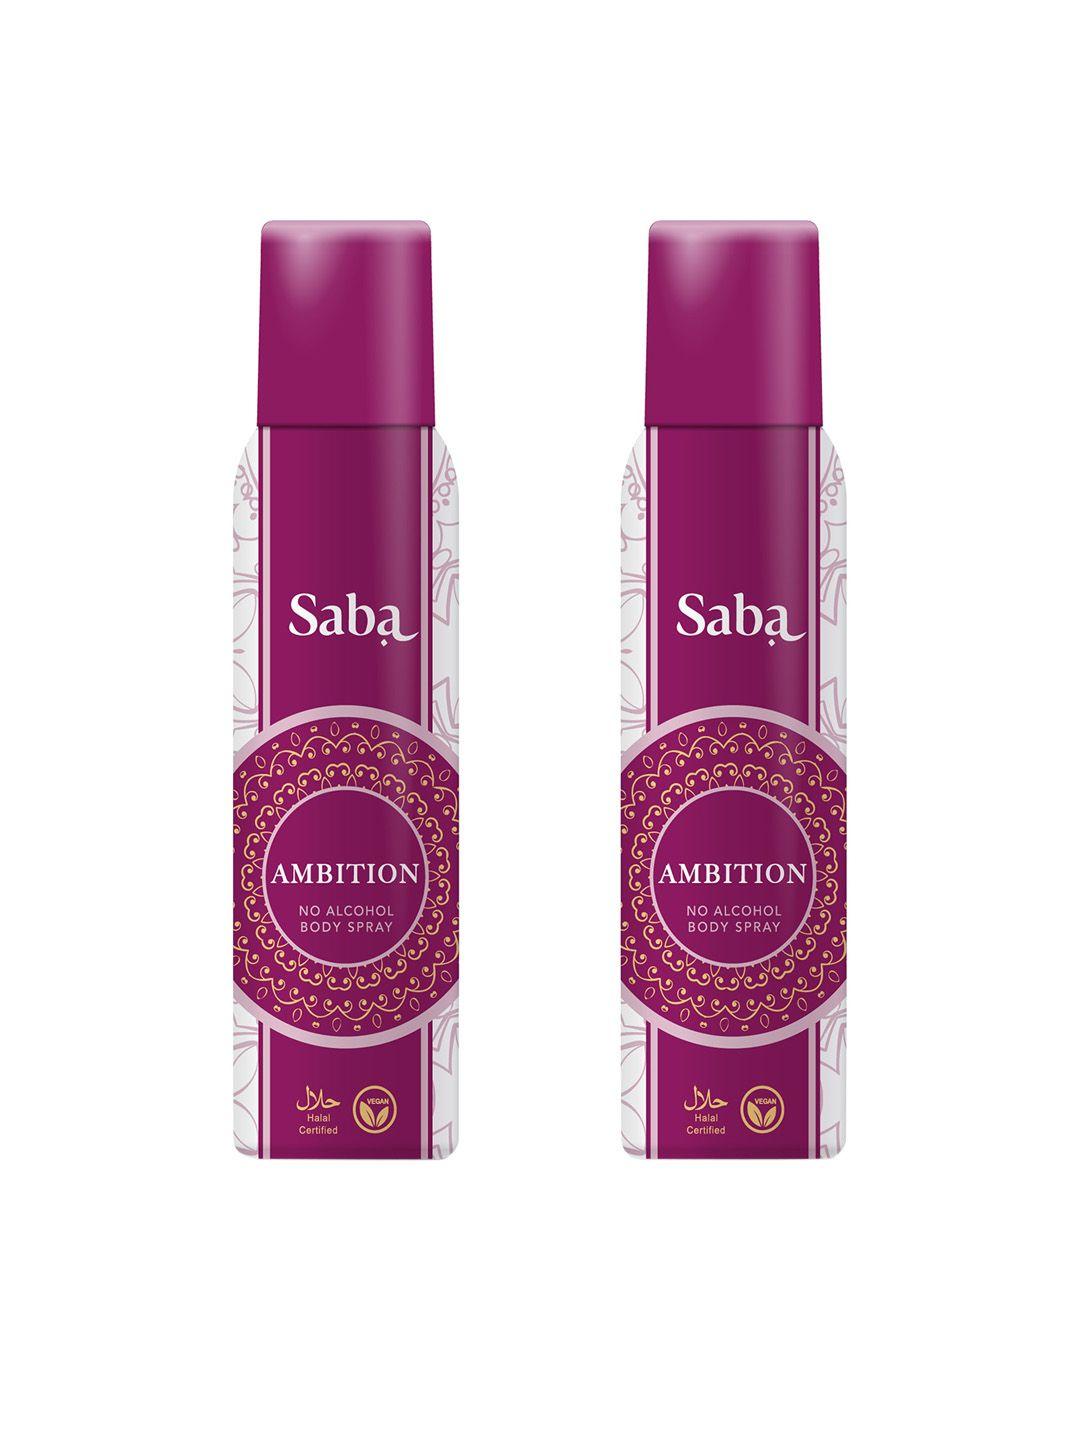 saba women set of 2 ambition no alcohol deodorant body spray - 150 ml each